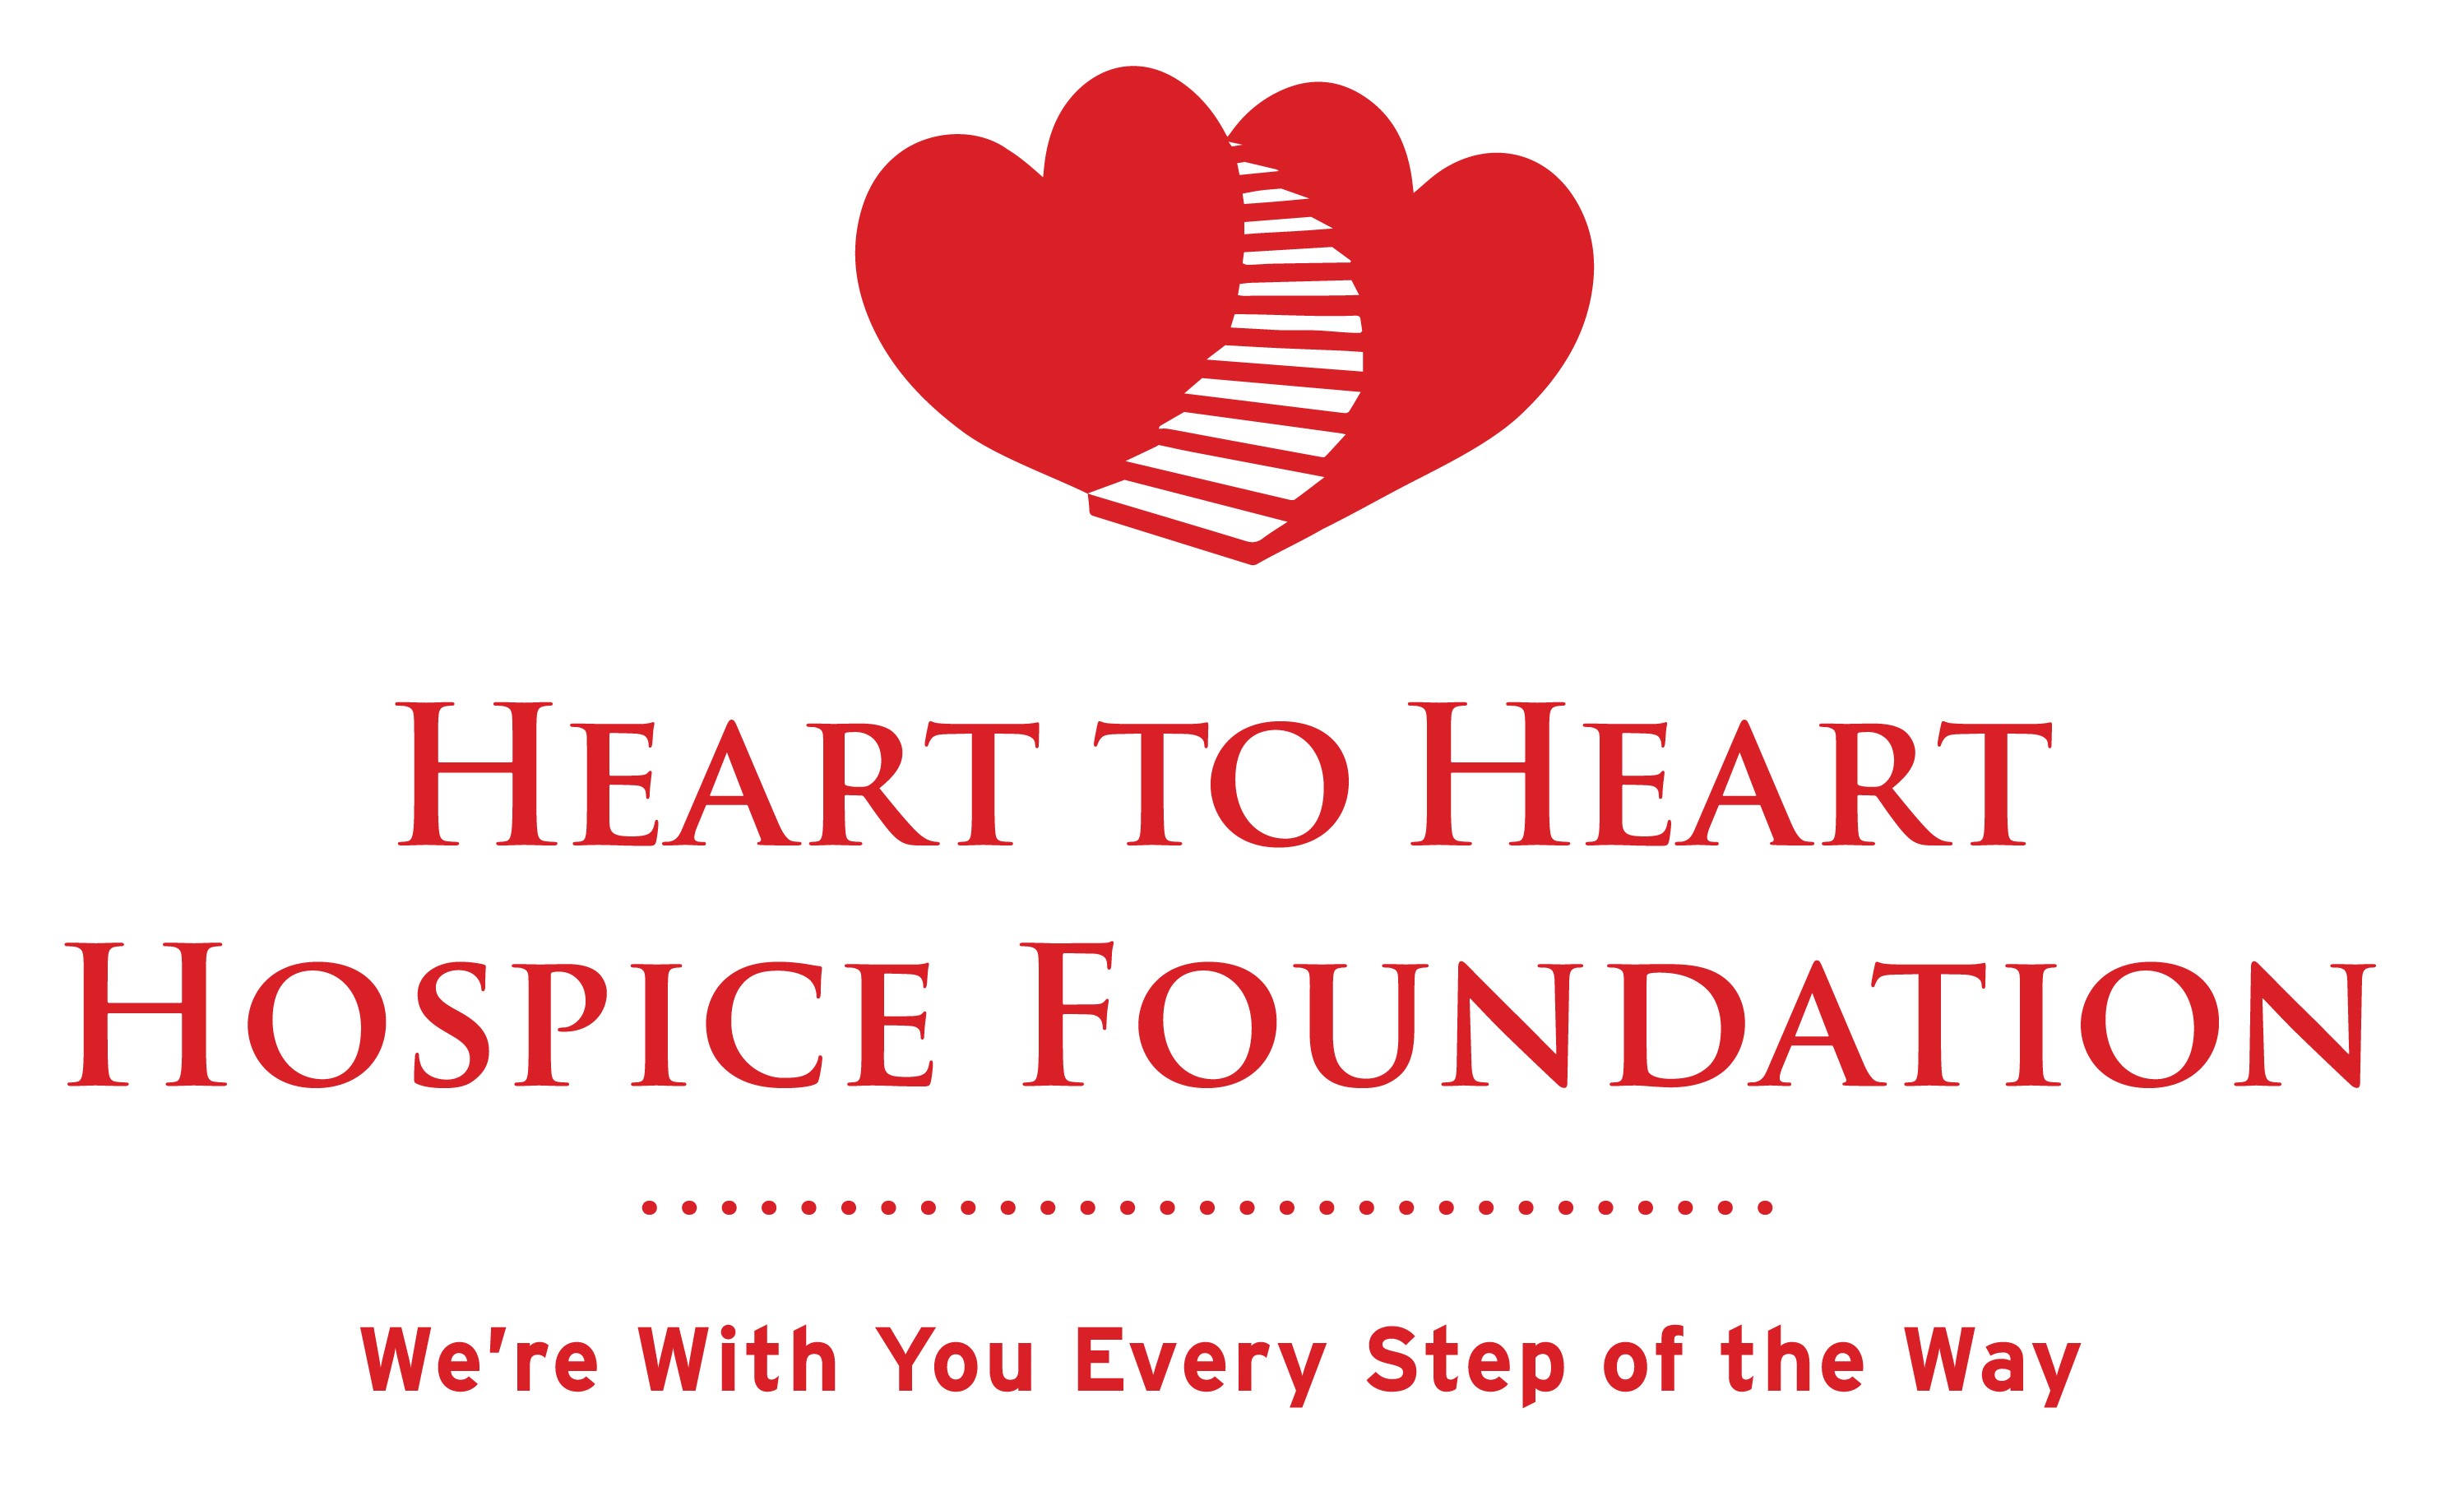 C. Fundación Heart to Heart Hospice (Photobooth)